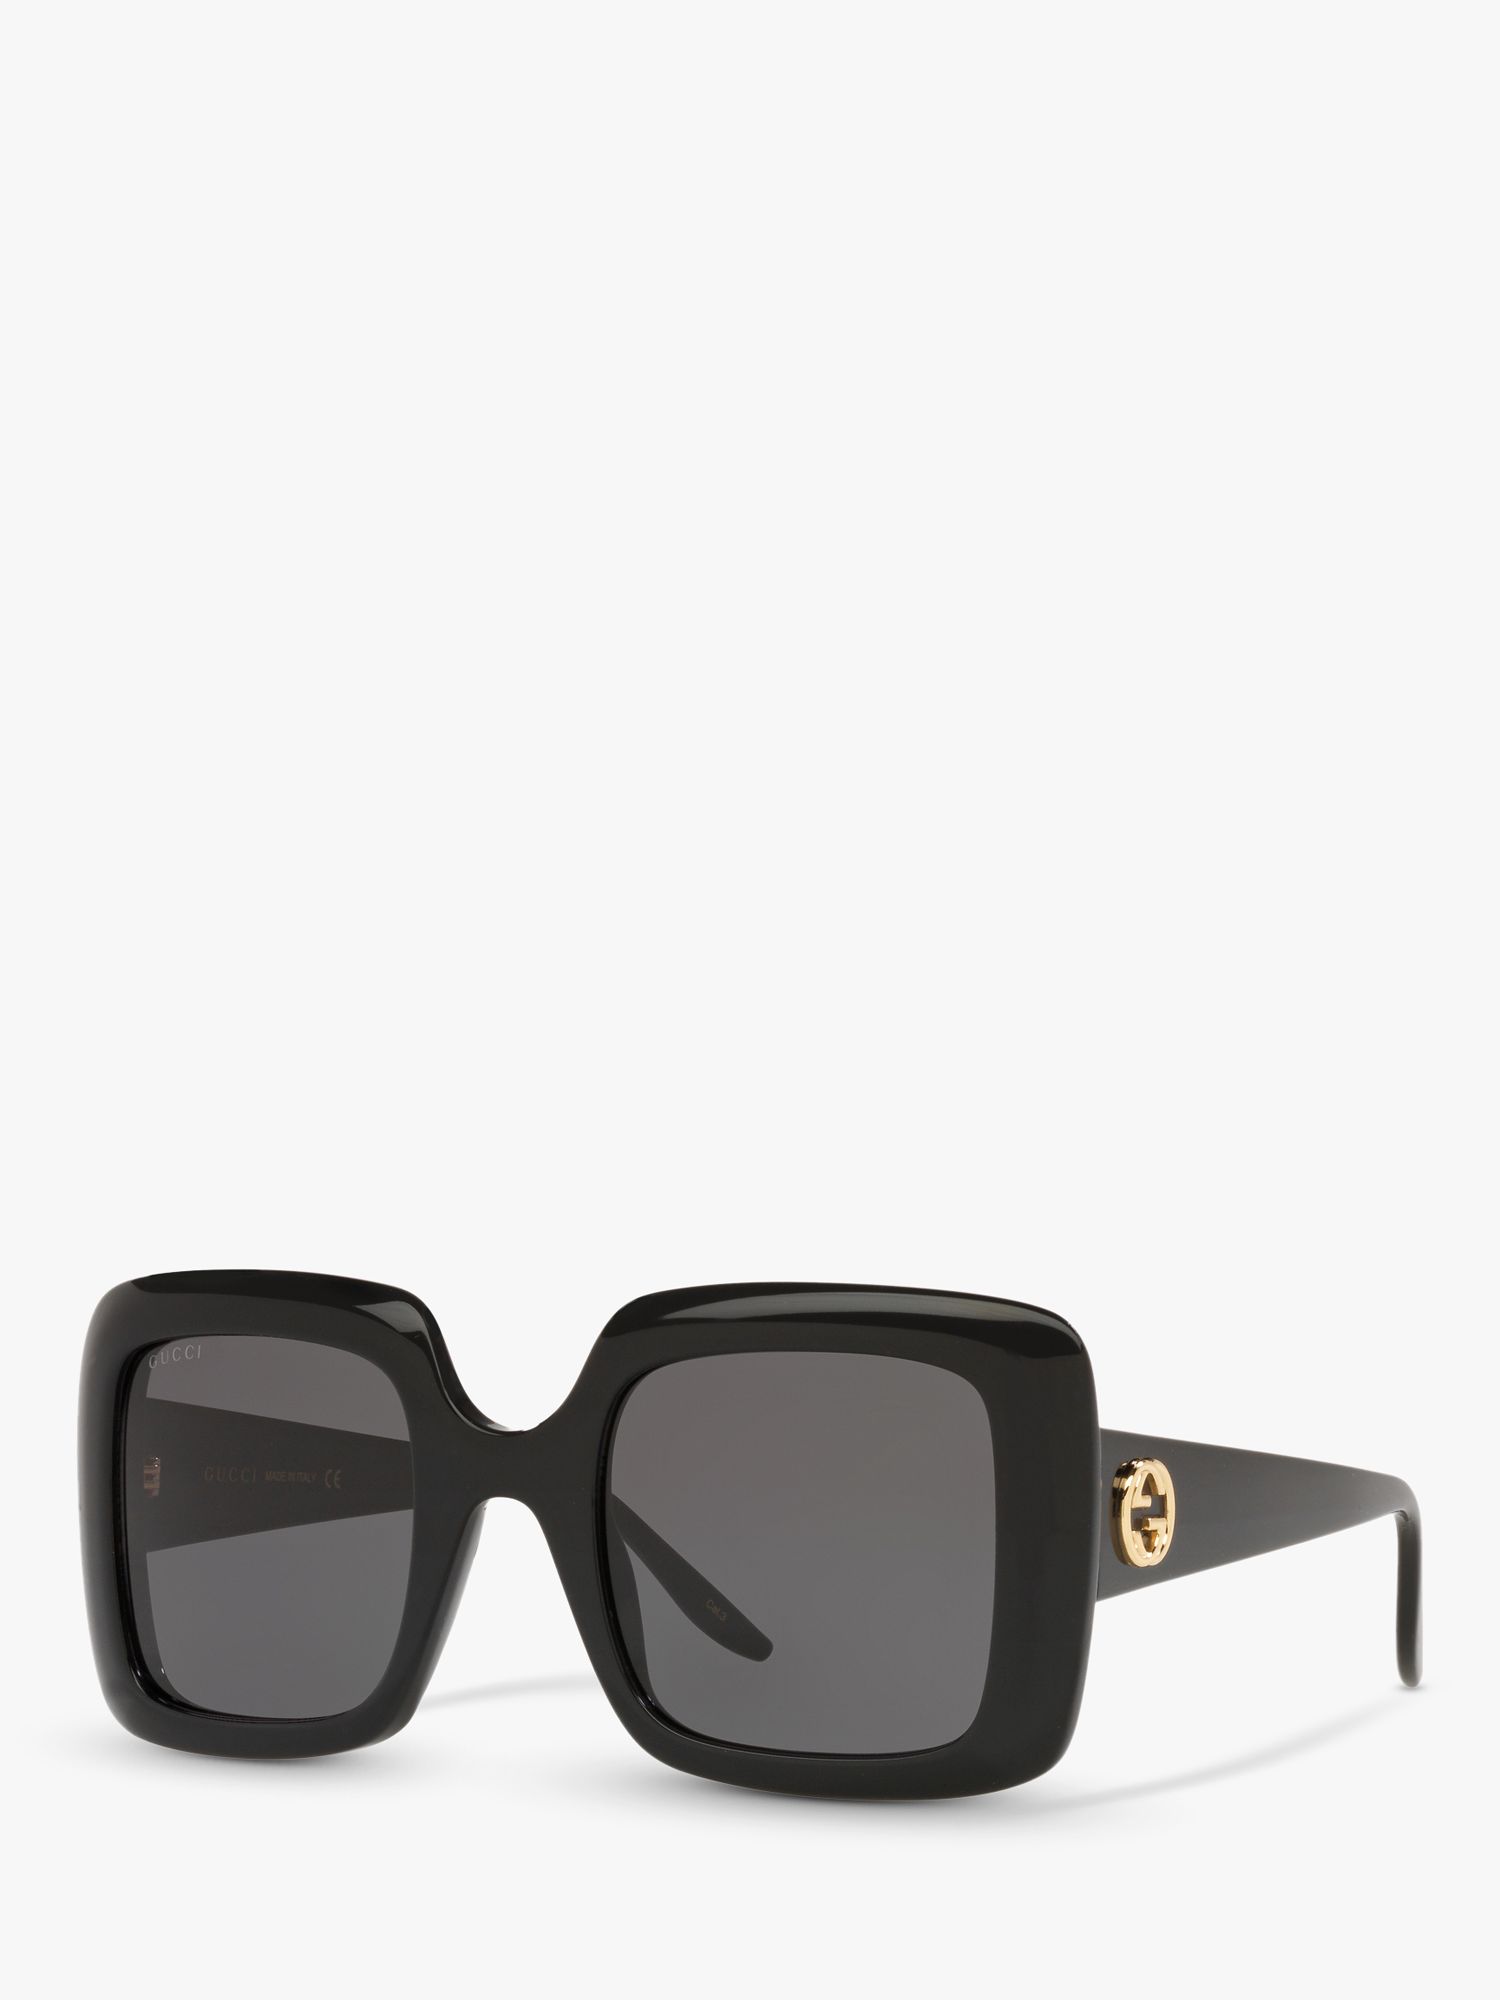 Gucci GG0896S Women's Square Sunglasses, Black/Grey at John Lewis ...